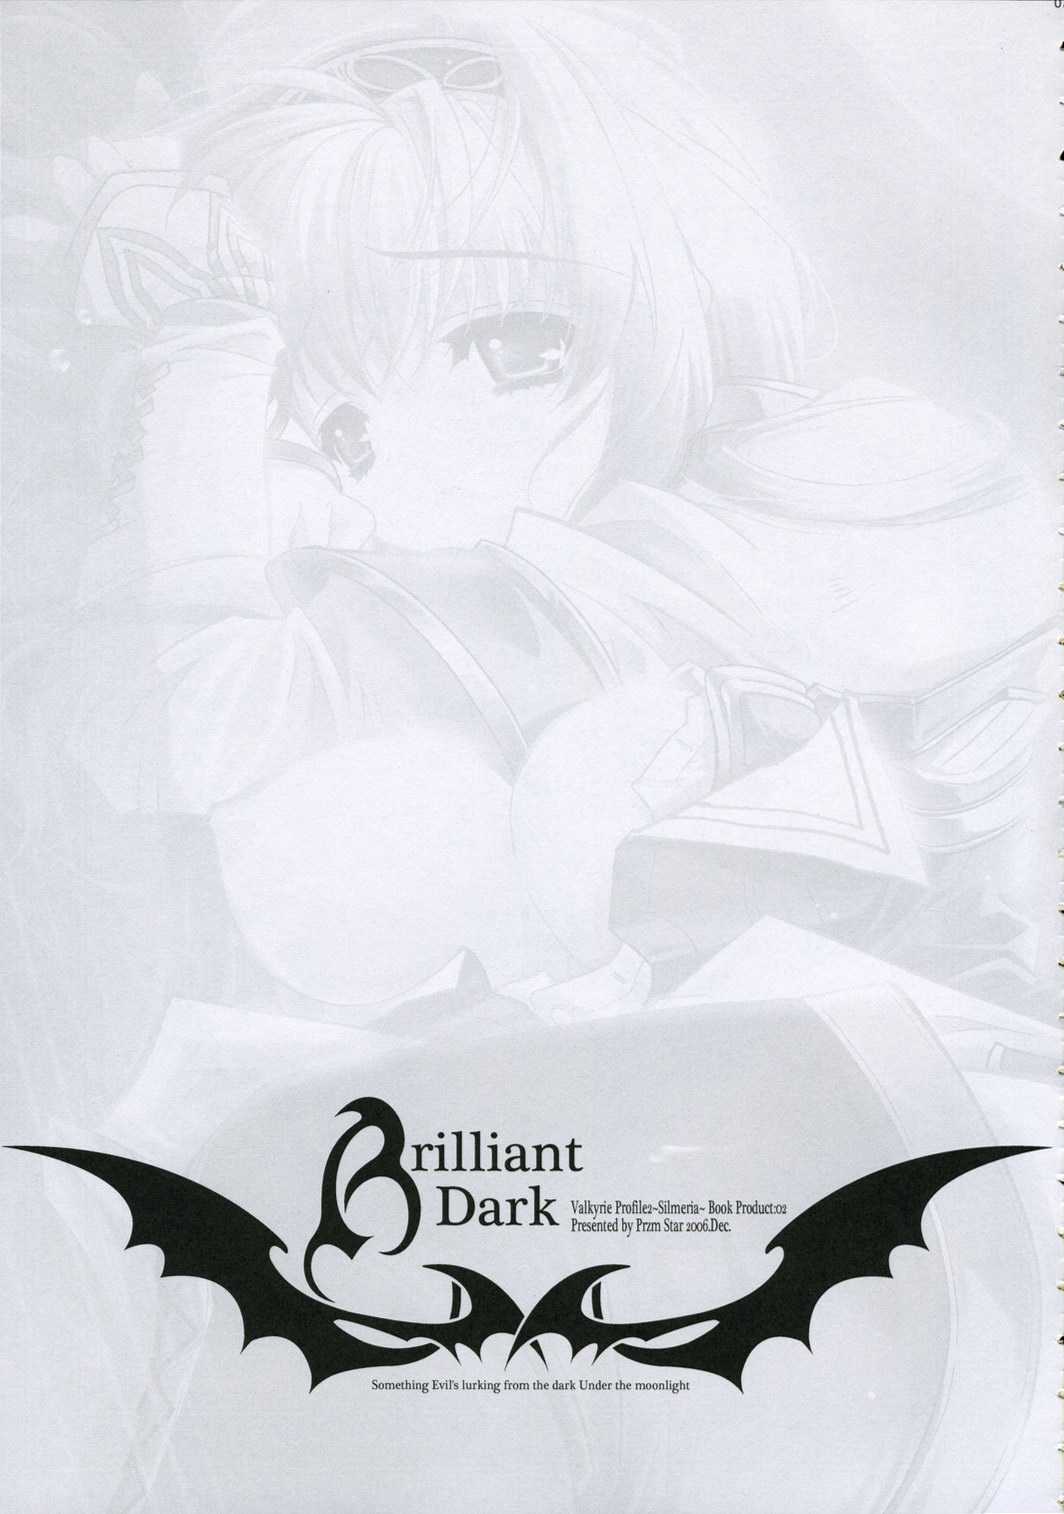 [Przm Star] [2006-12-29] [C71] Brilliant Dark 